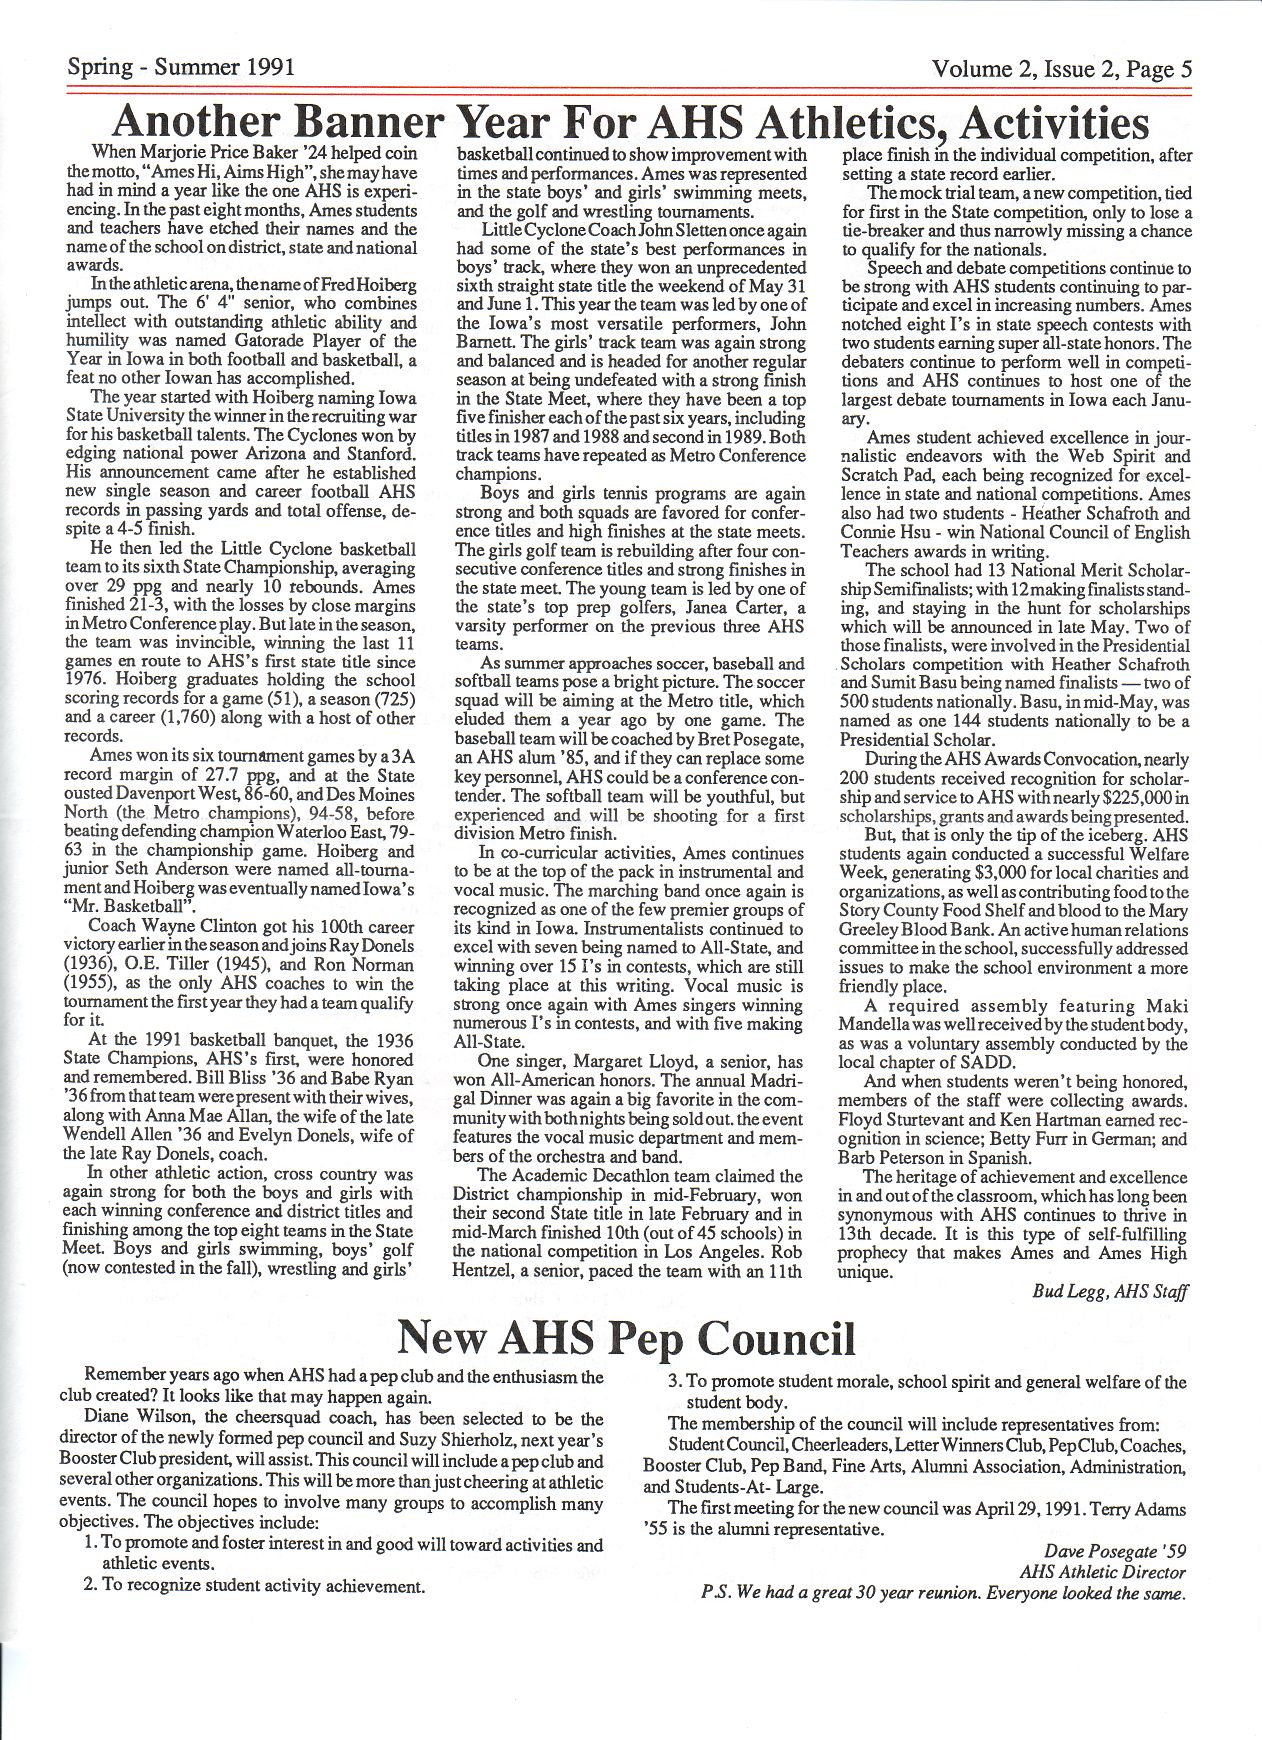 1991 page 5 Ames High School Alumni Assoc. spring-summer newsletter volume 2 issue 2